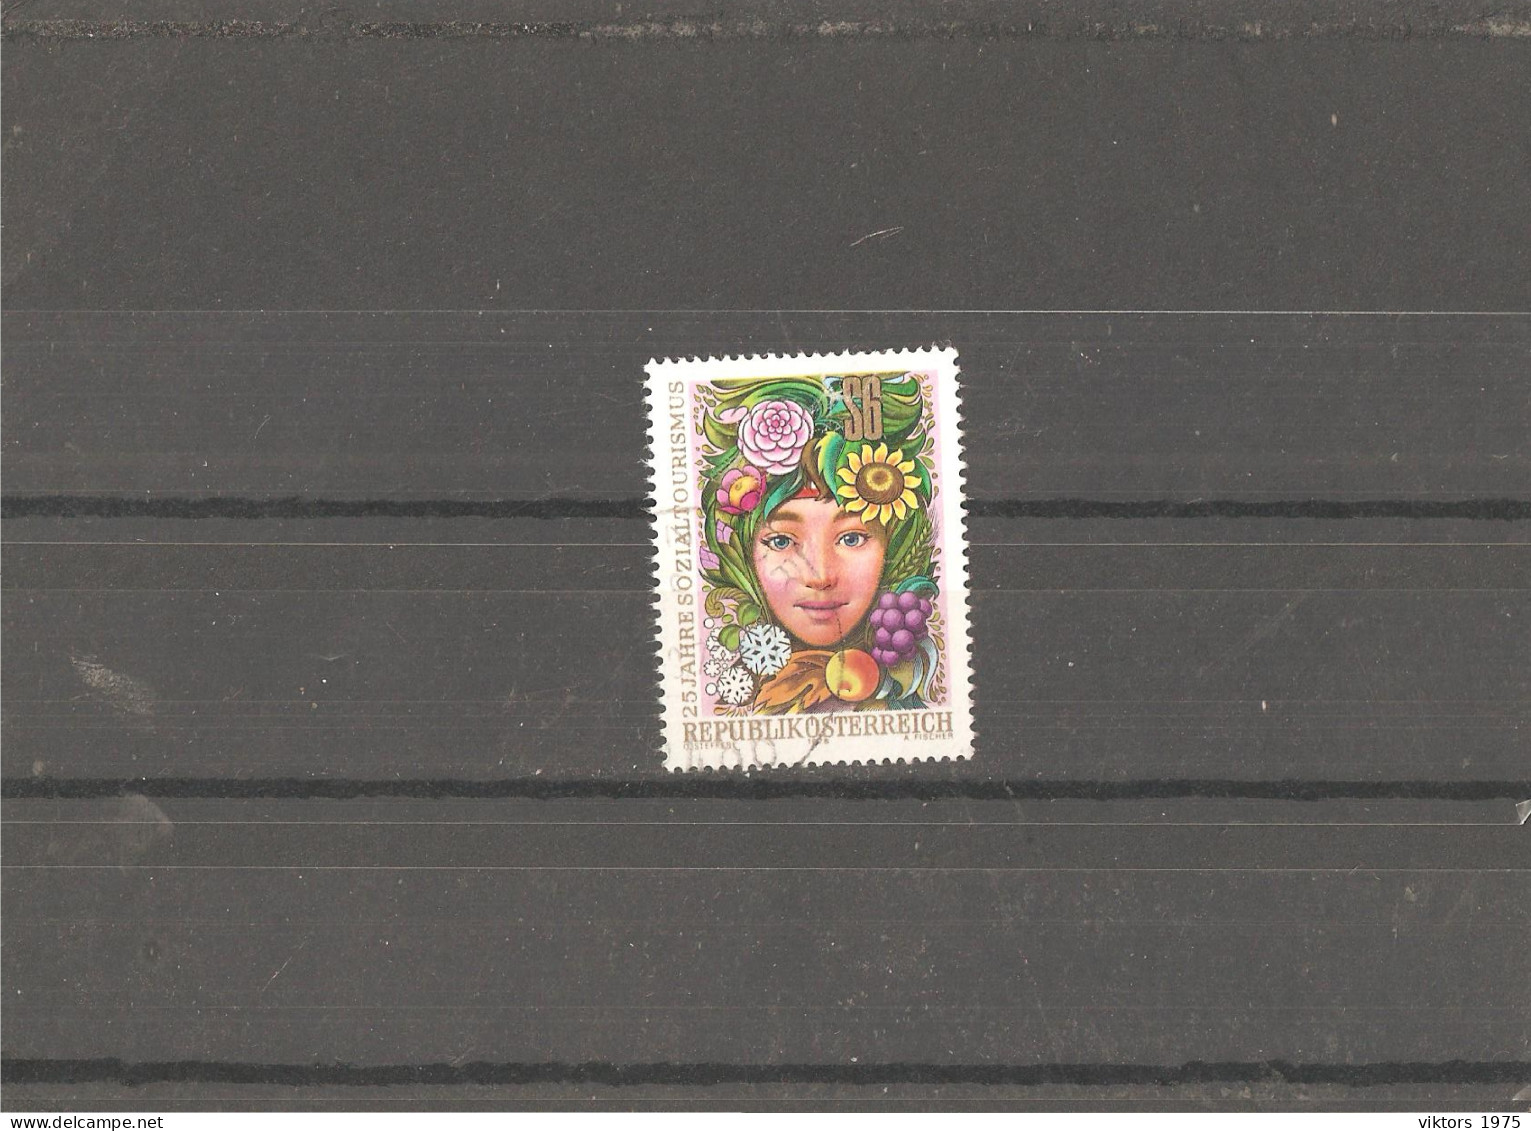 Used Stamp Nr.1577 In MICHEL Catalog - Usados